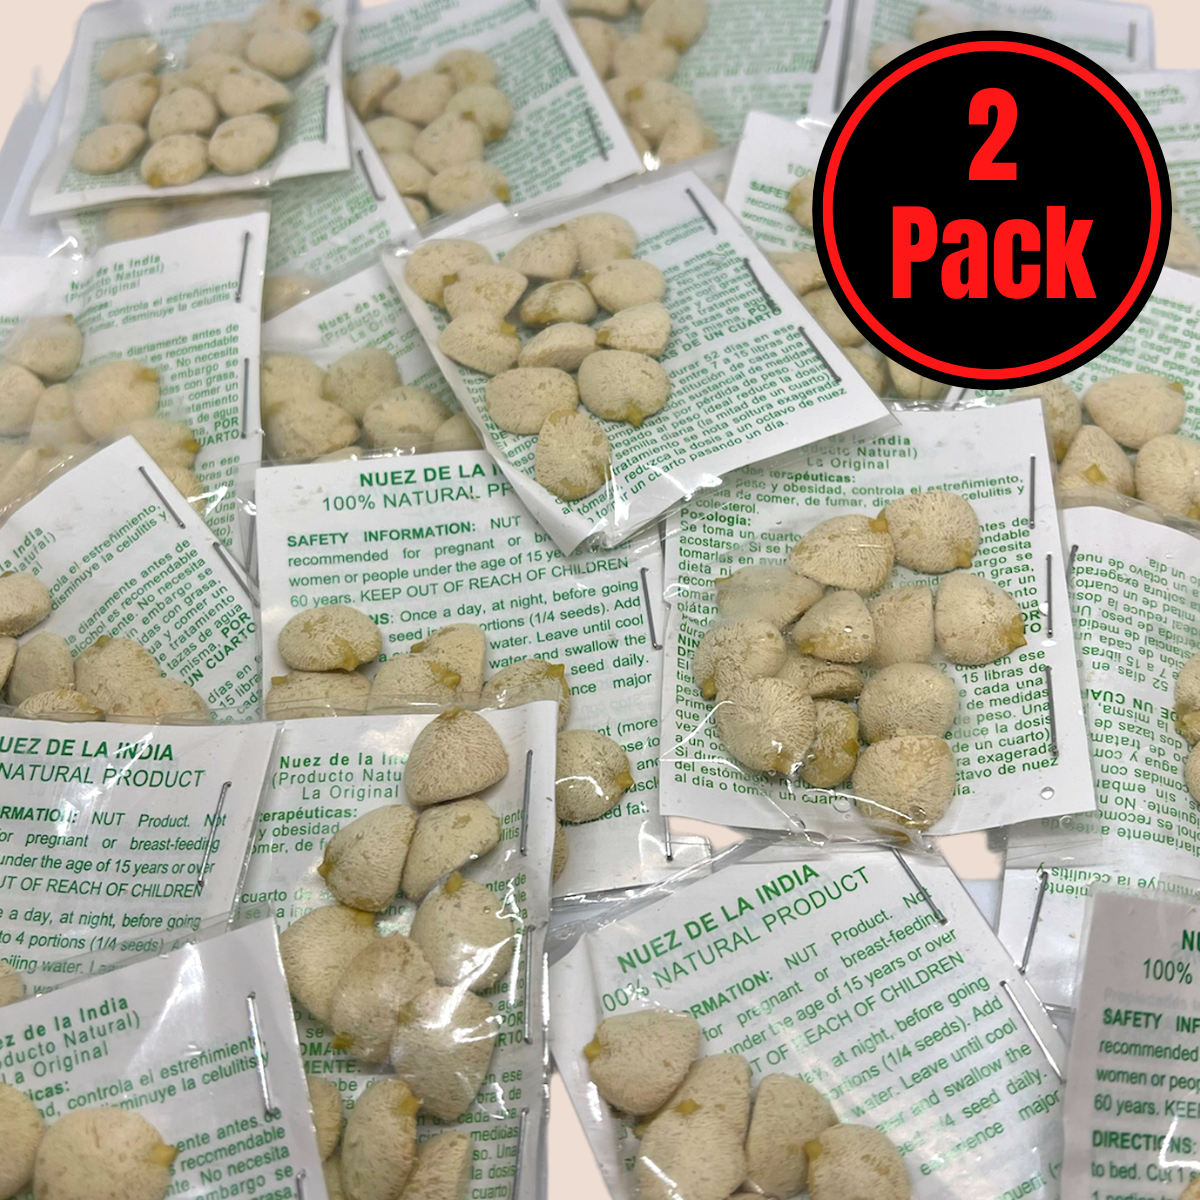 2 Packs (24) Nuez de la India Garantizada Semilla Adelgazante Diet Seed Brazil